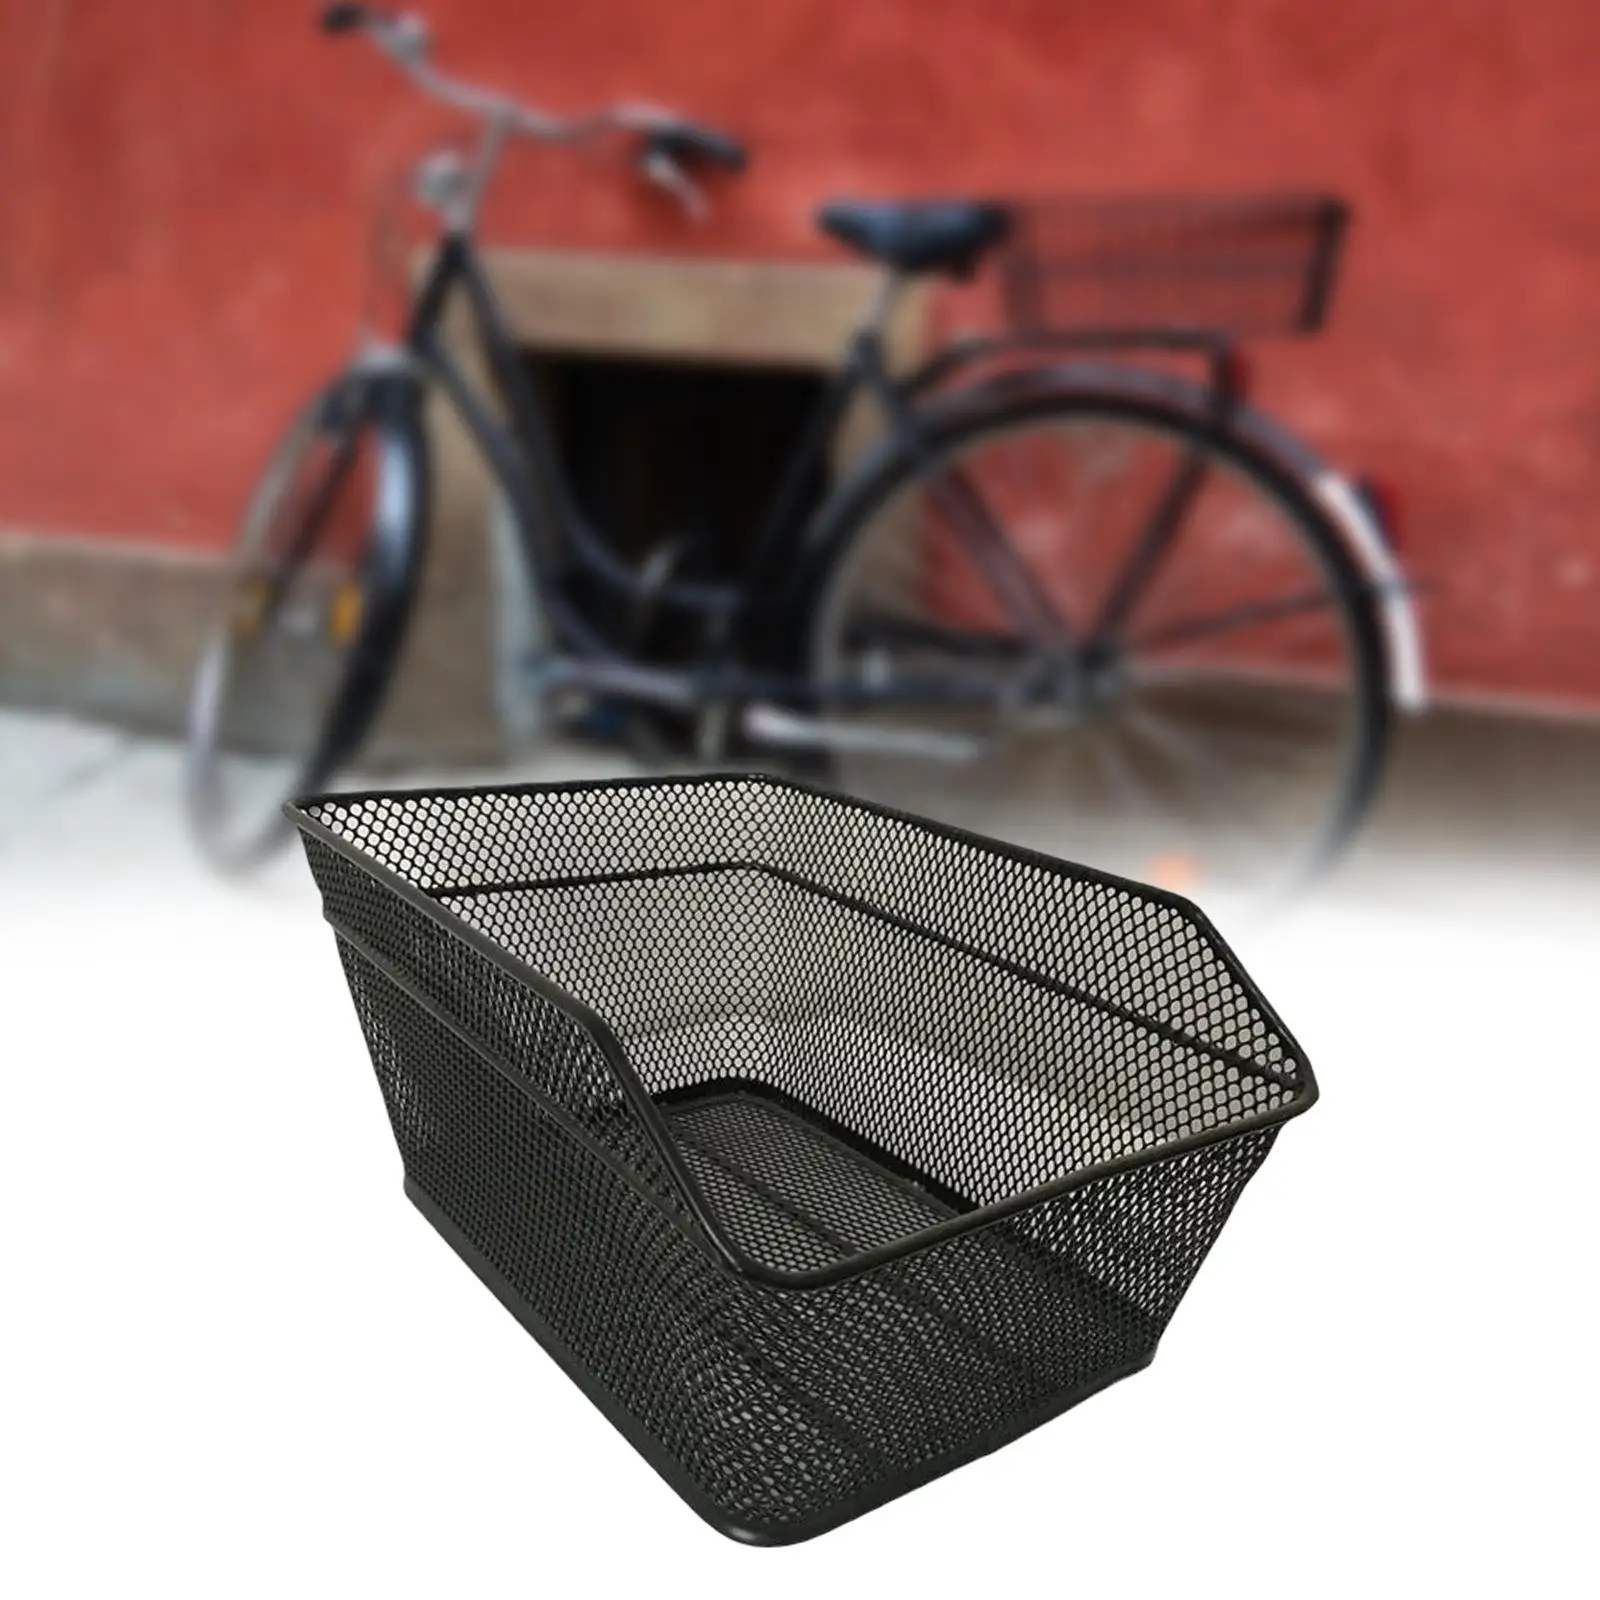 Universal Rear Bike Basket Wear Resistant Rainproof High Capacity Accessories